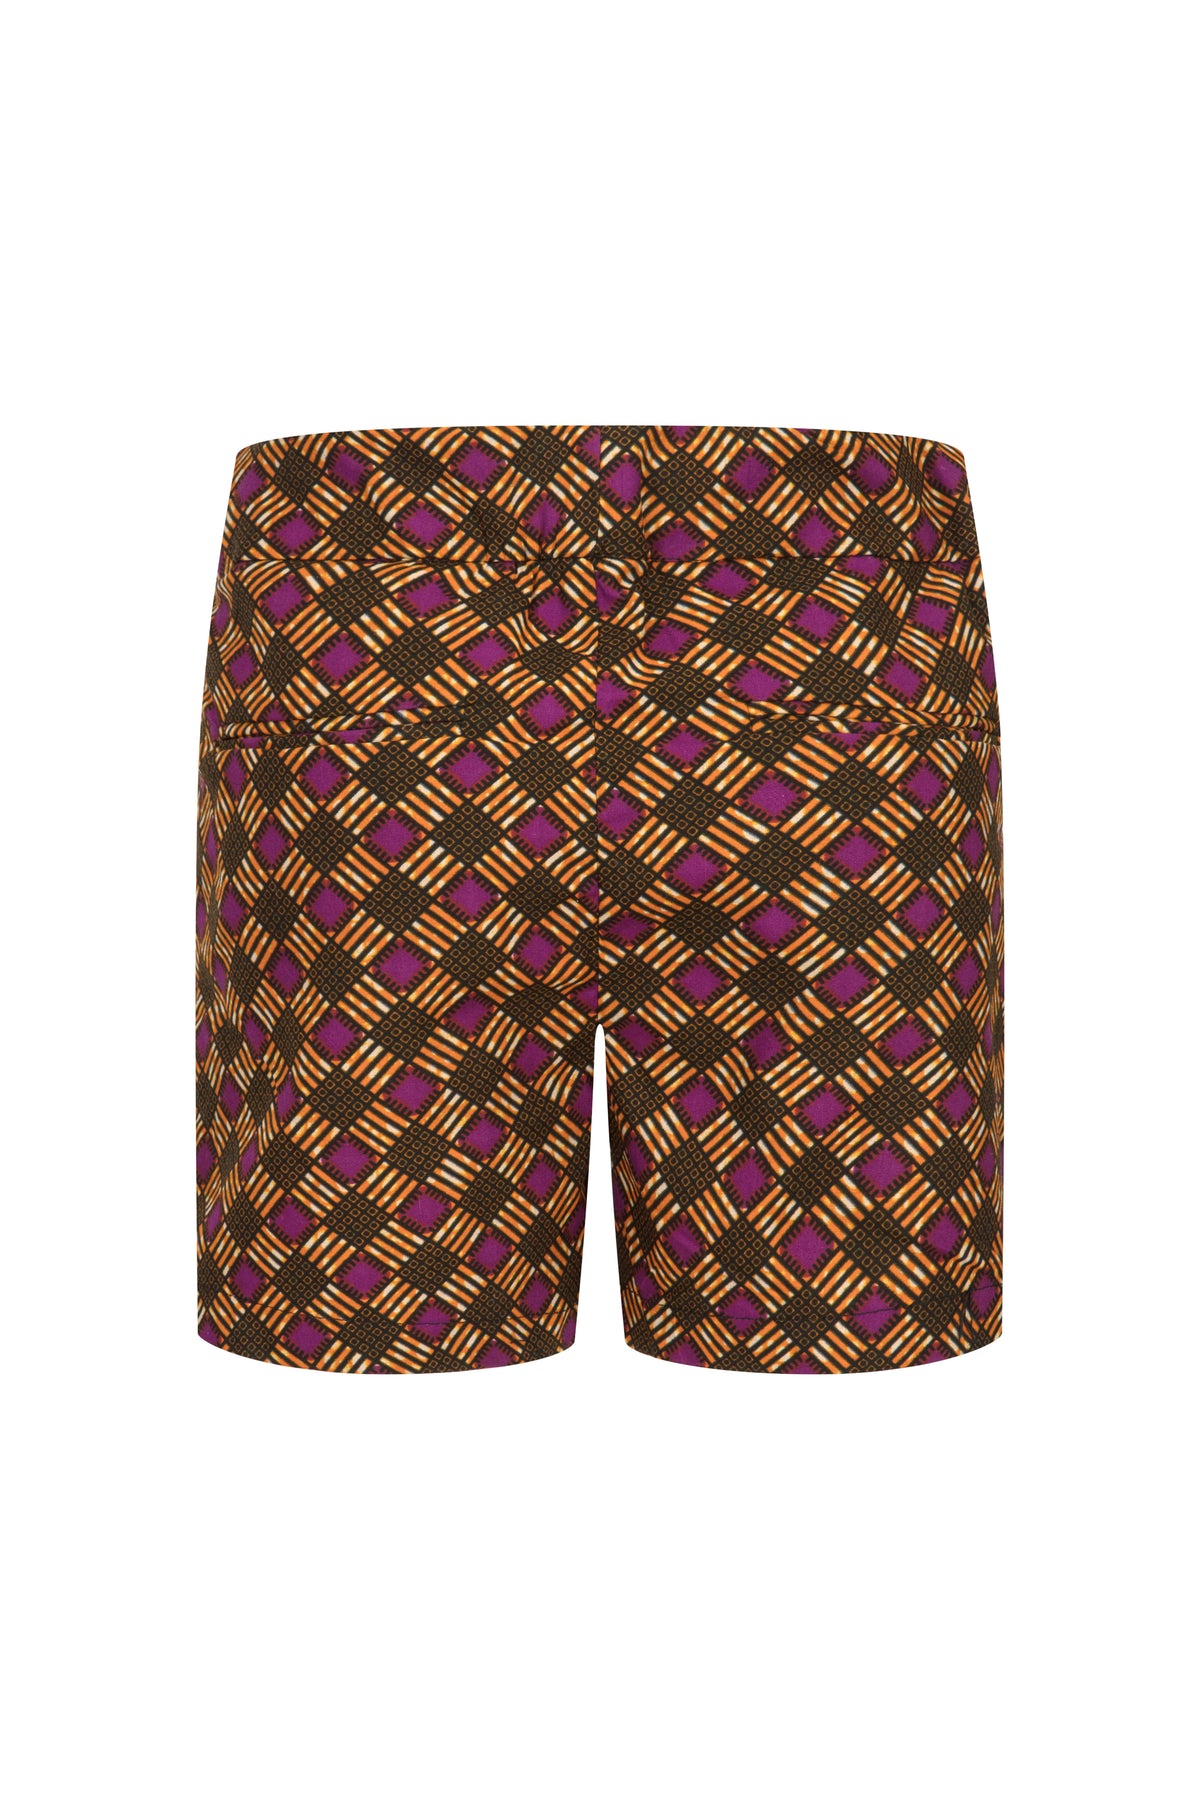 Boys shirt and shorts set- Chess Board - OHEMA OHENE AFRICAN INSPIRED FASHION